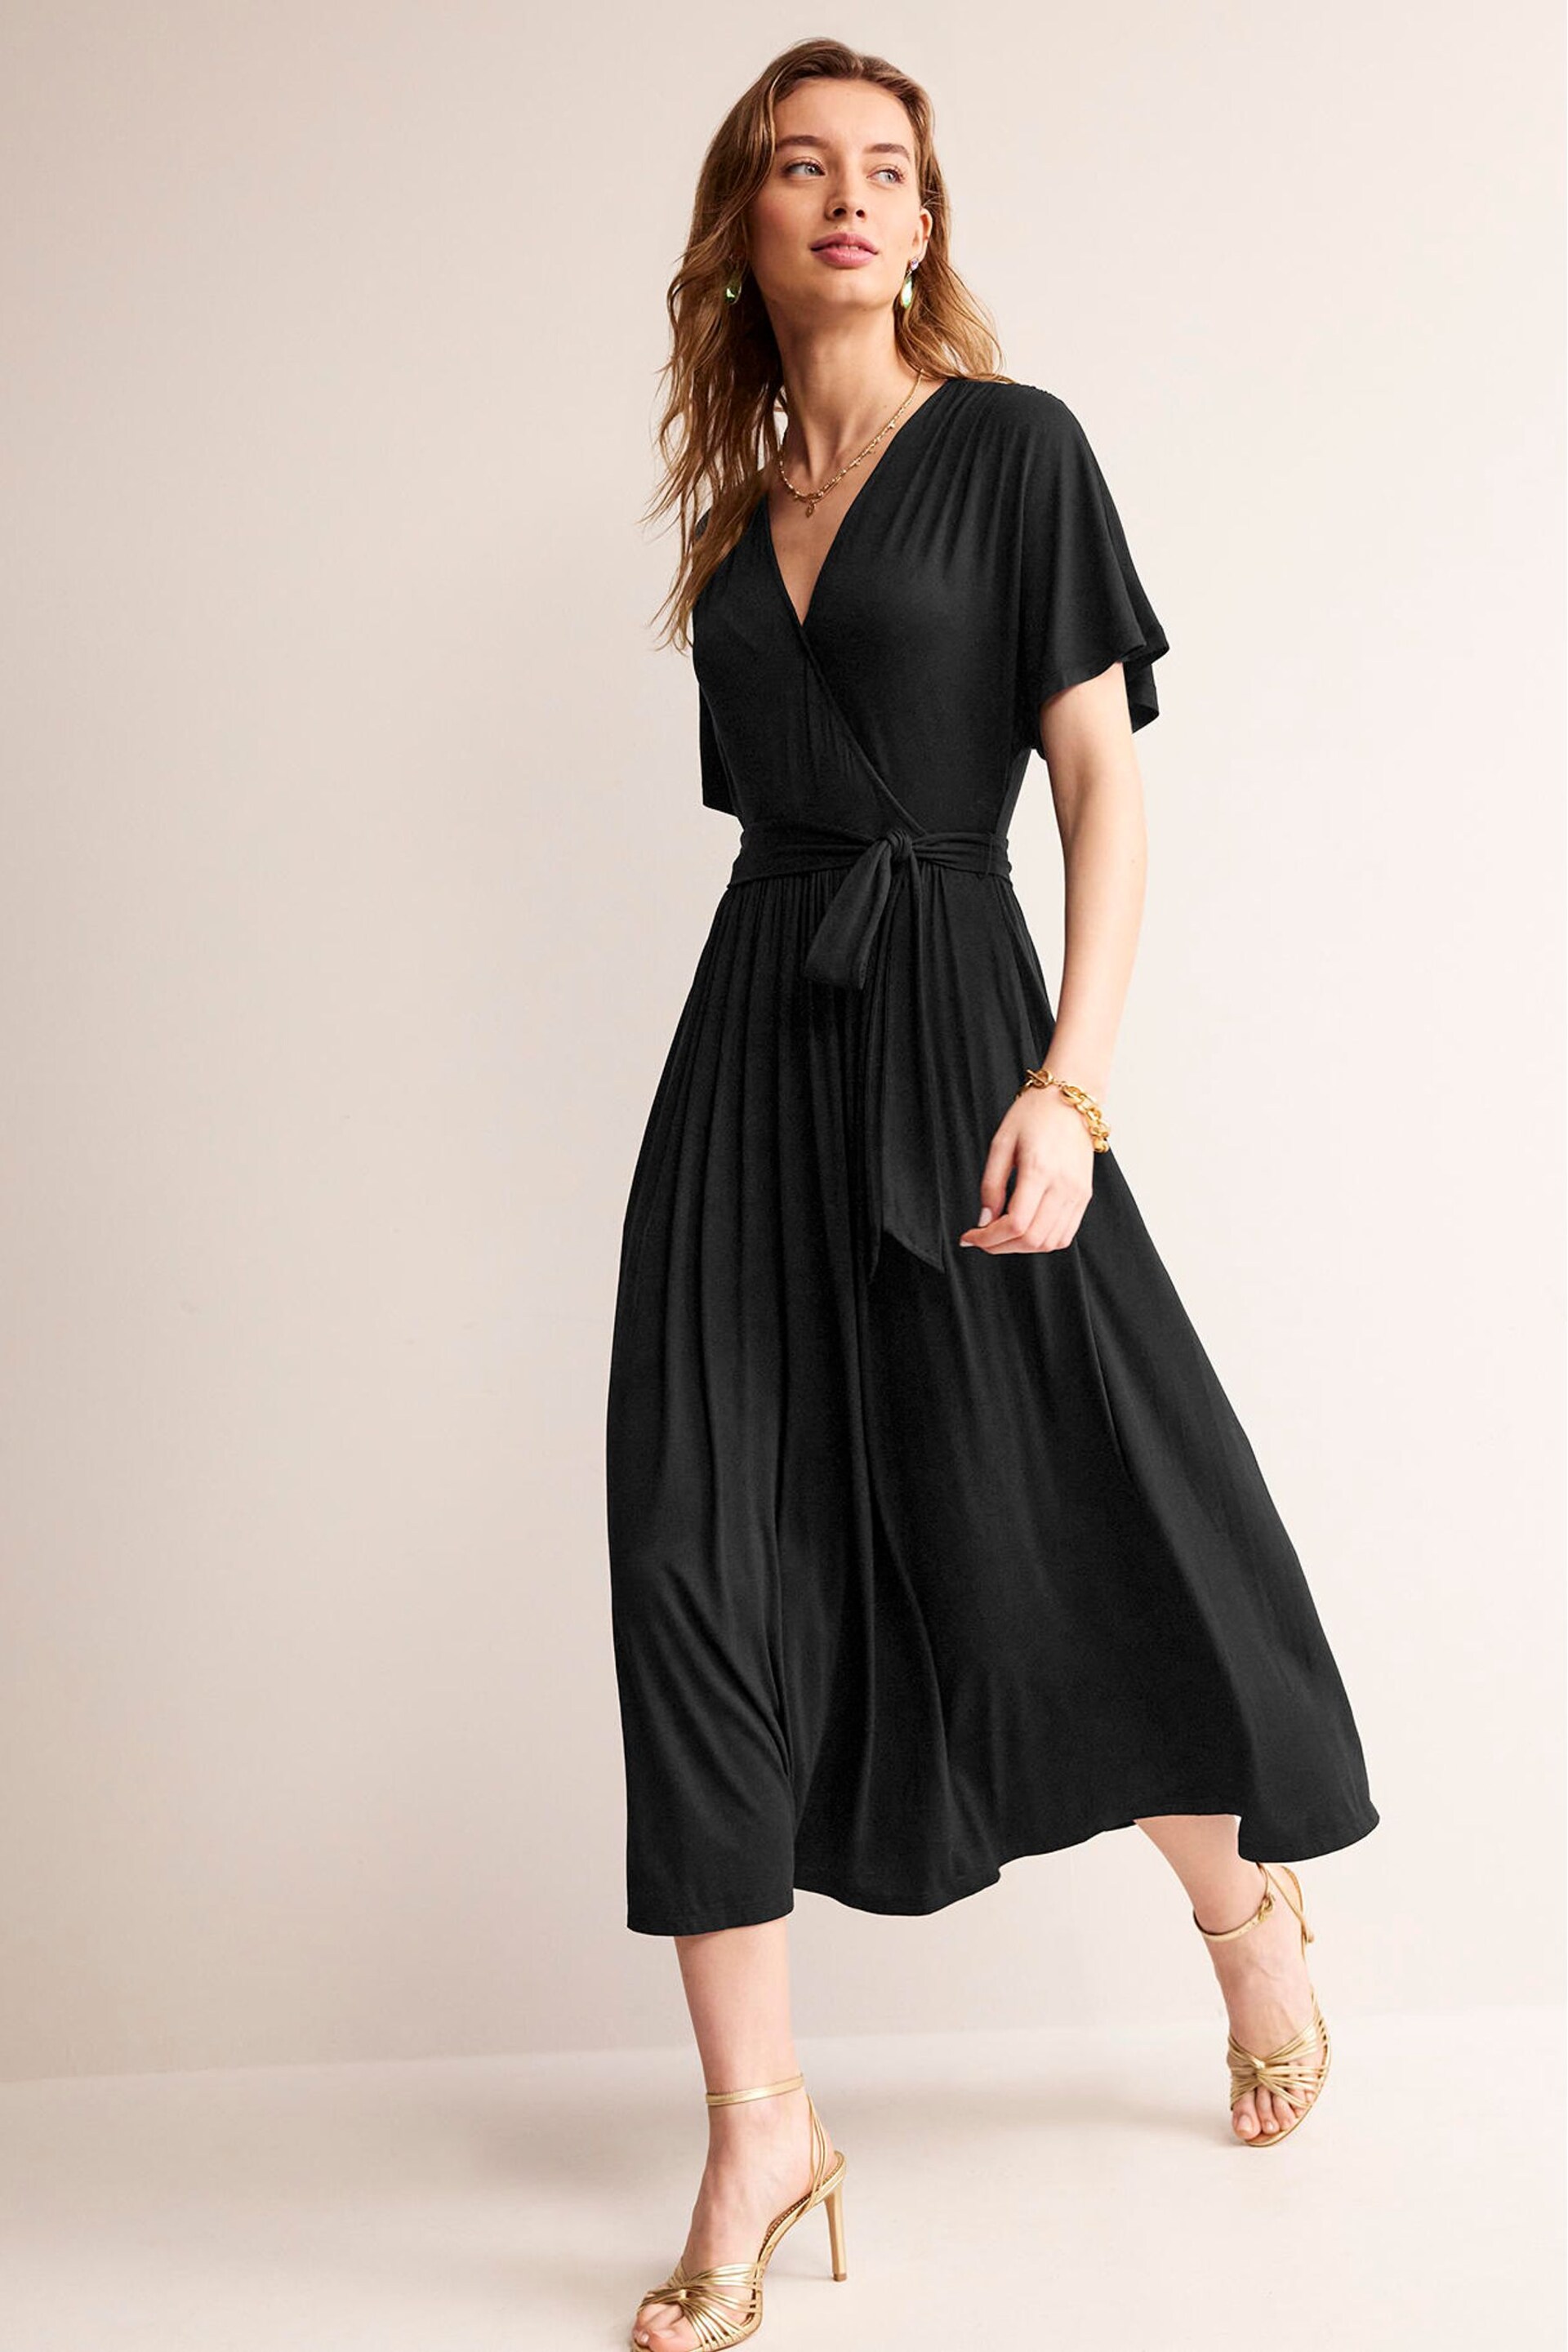 Boden Black Petite Kimono Wrap Jersey Midi Dress - Image 1 of 5